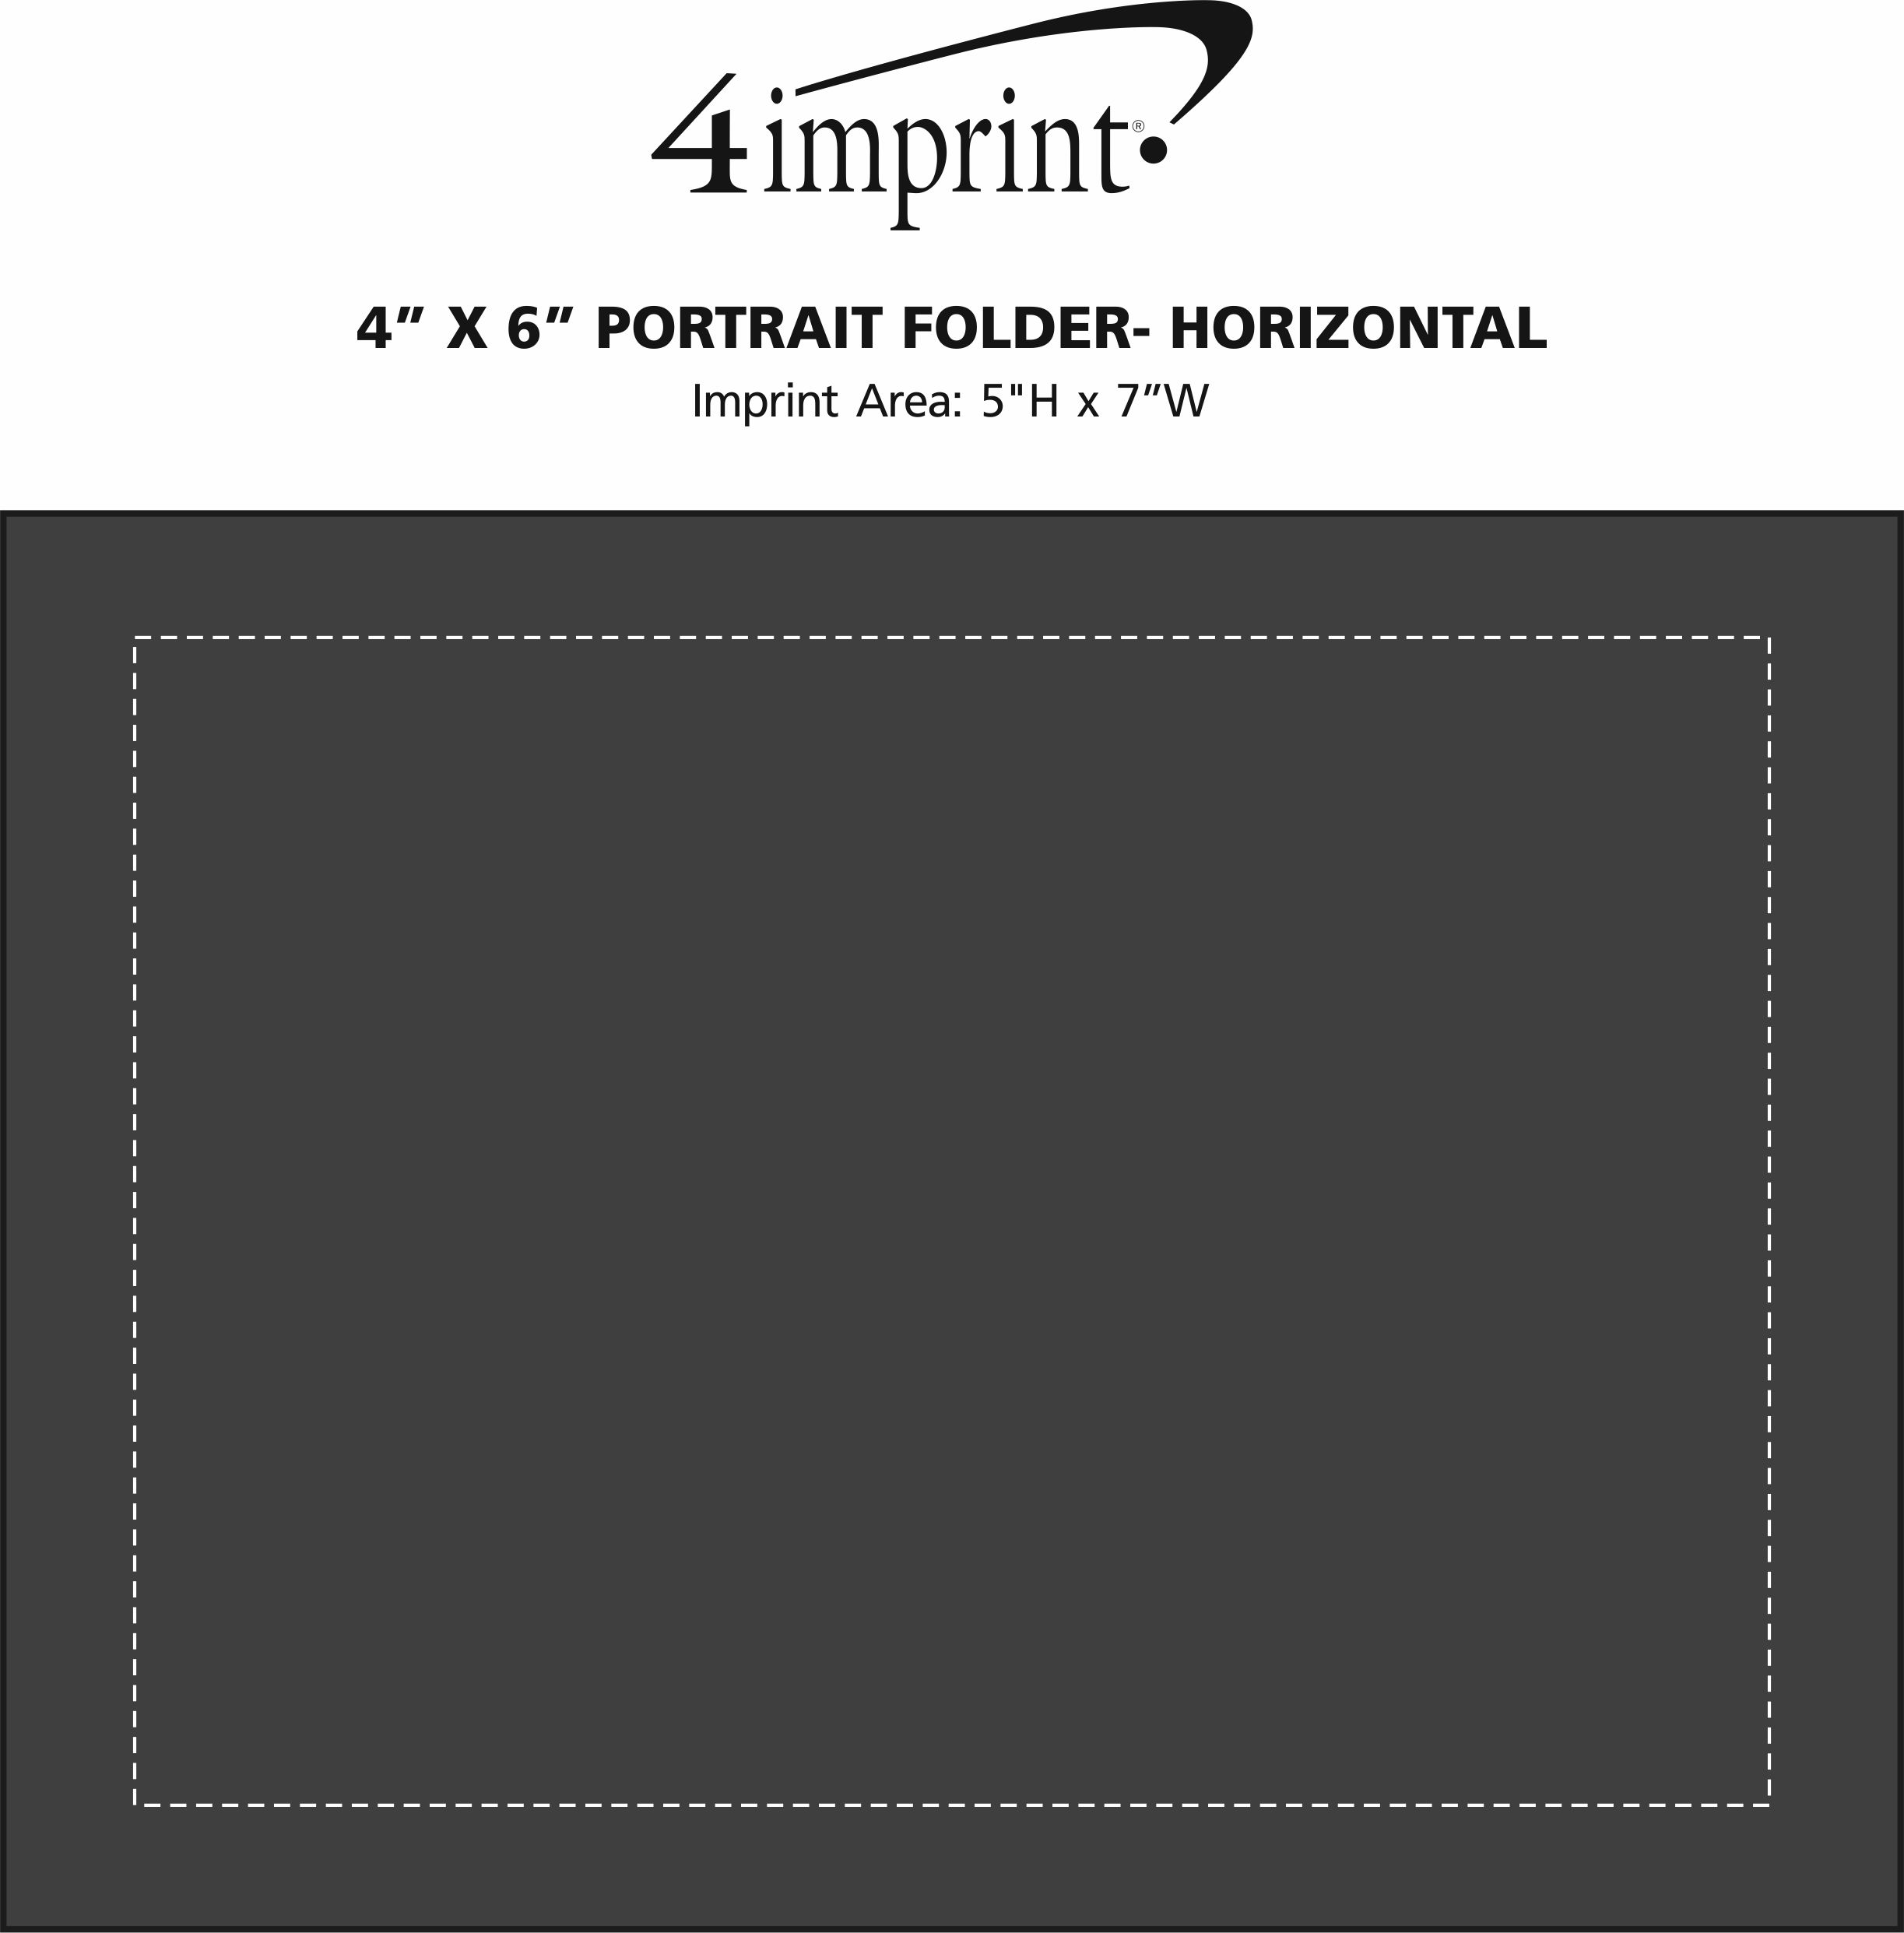 Imprint Area of 4" x 6" Portrait Folder - Horizontal